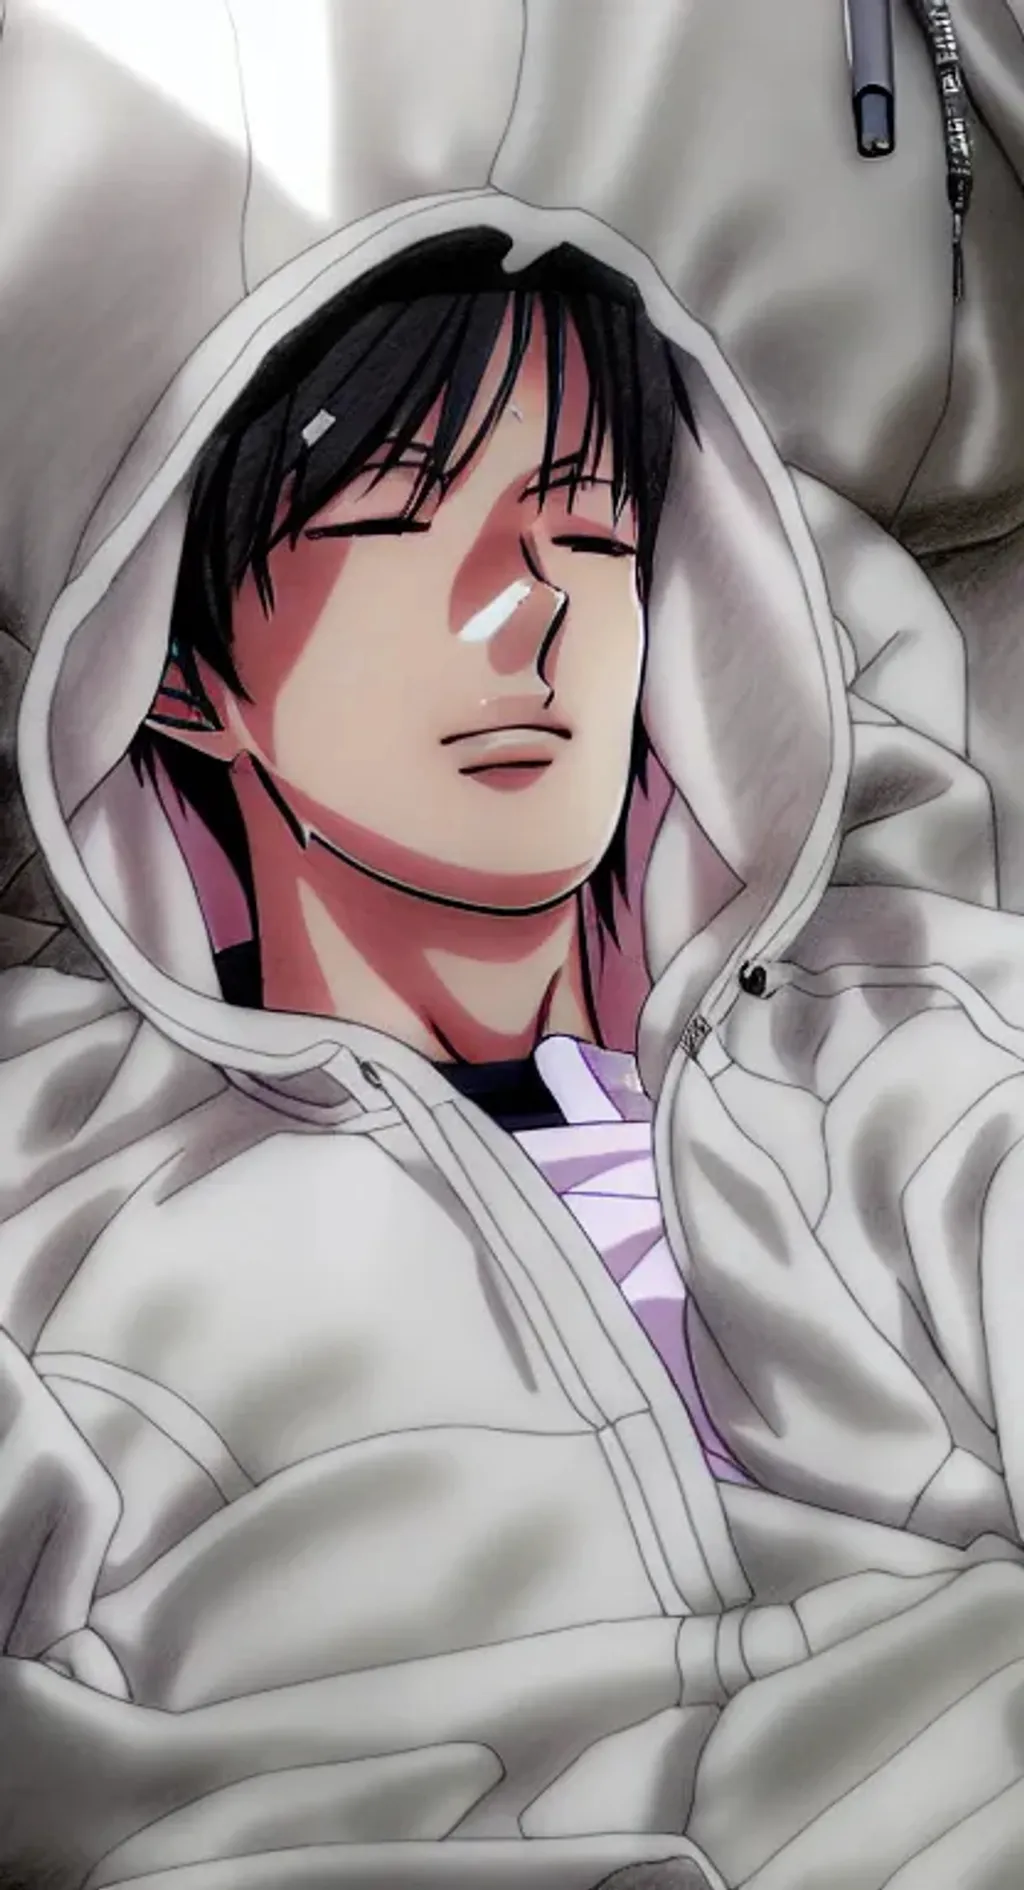 anime boy laying down